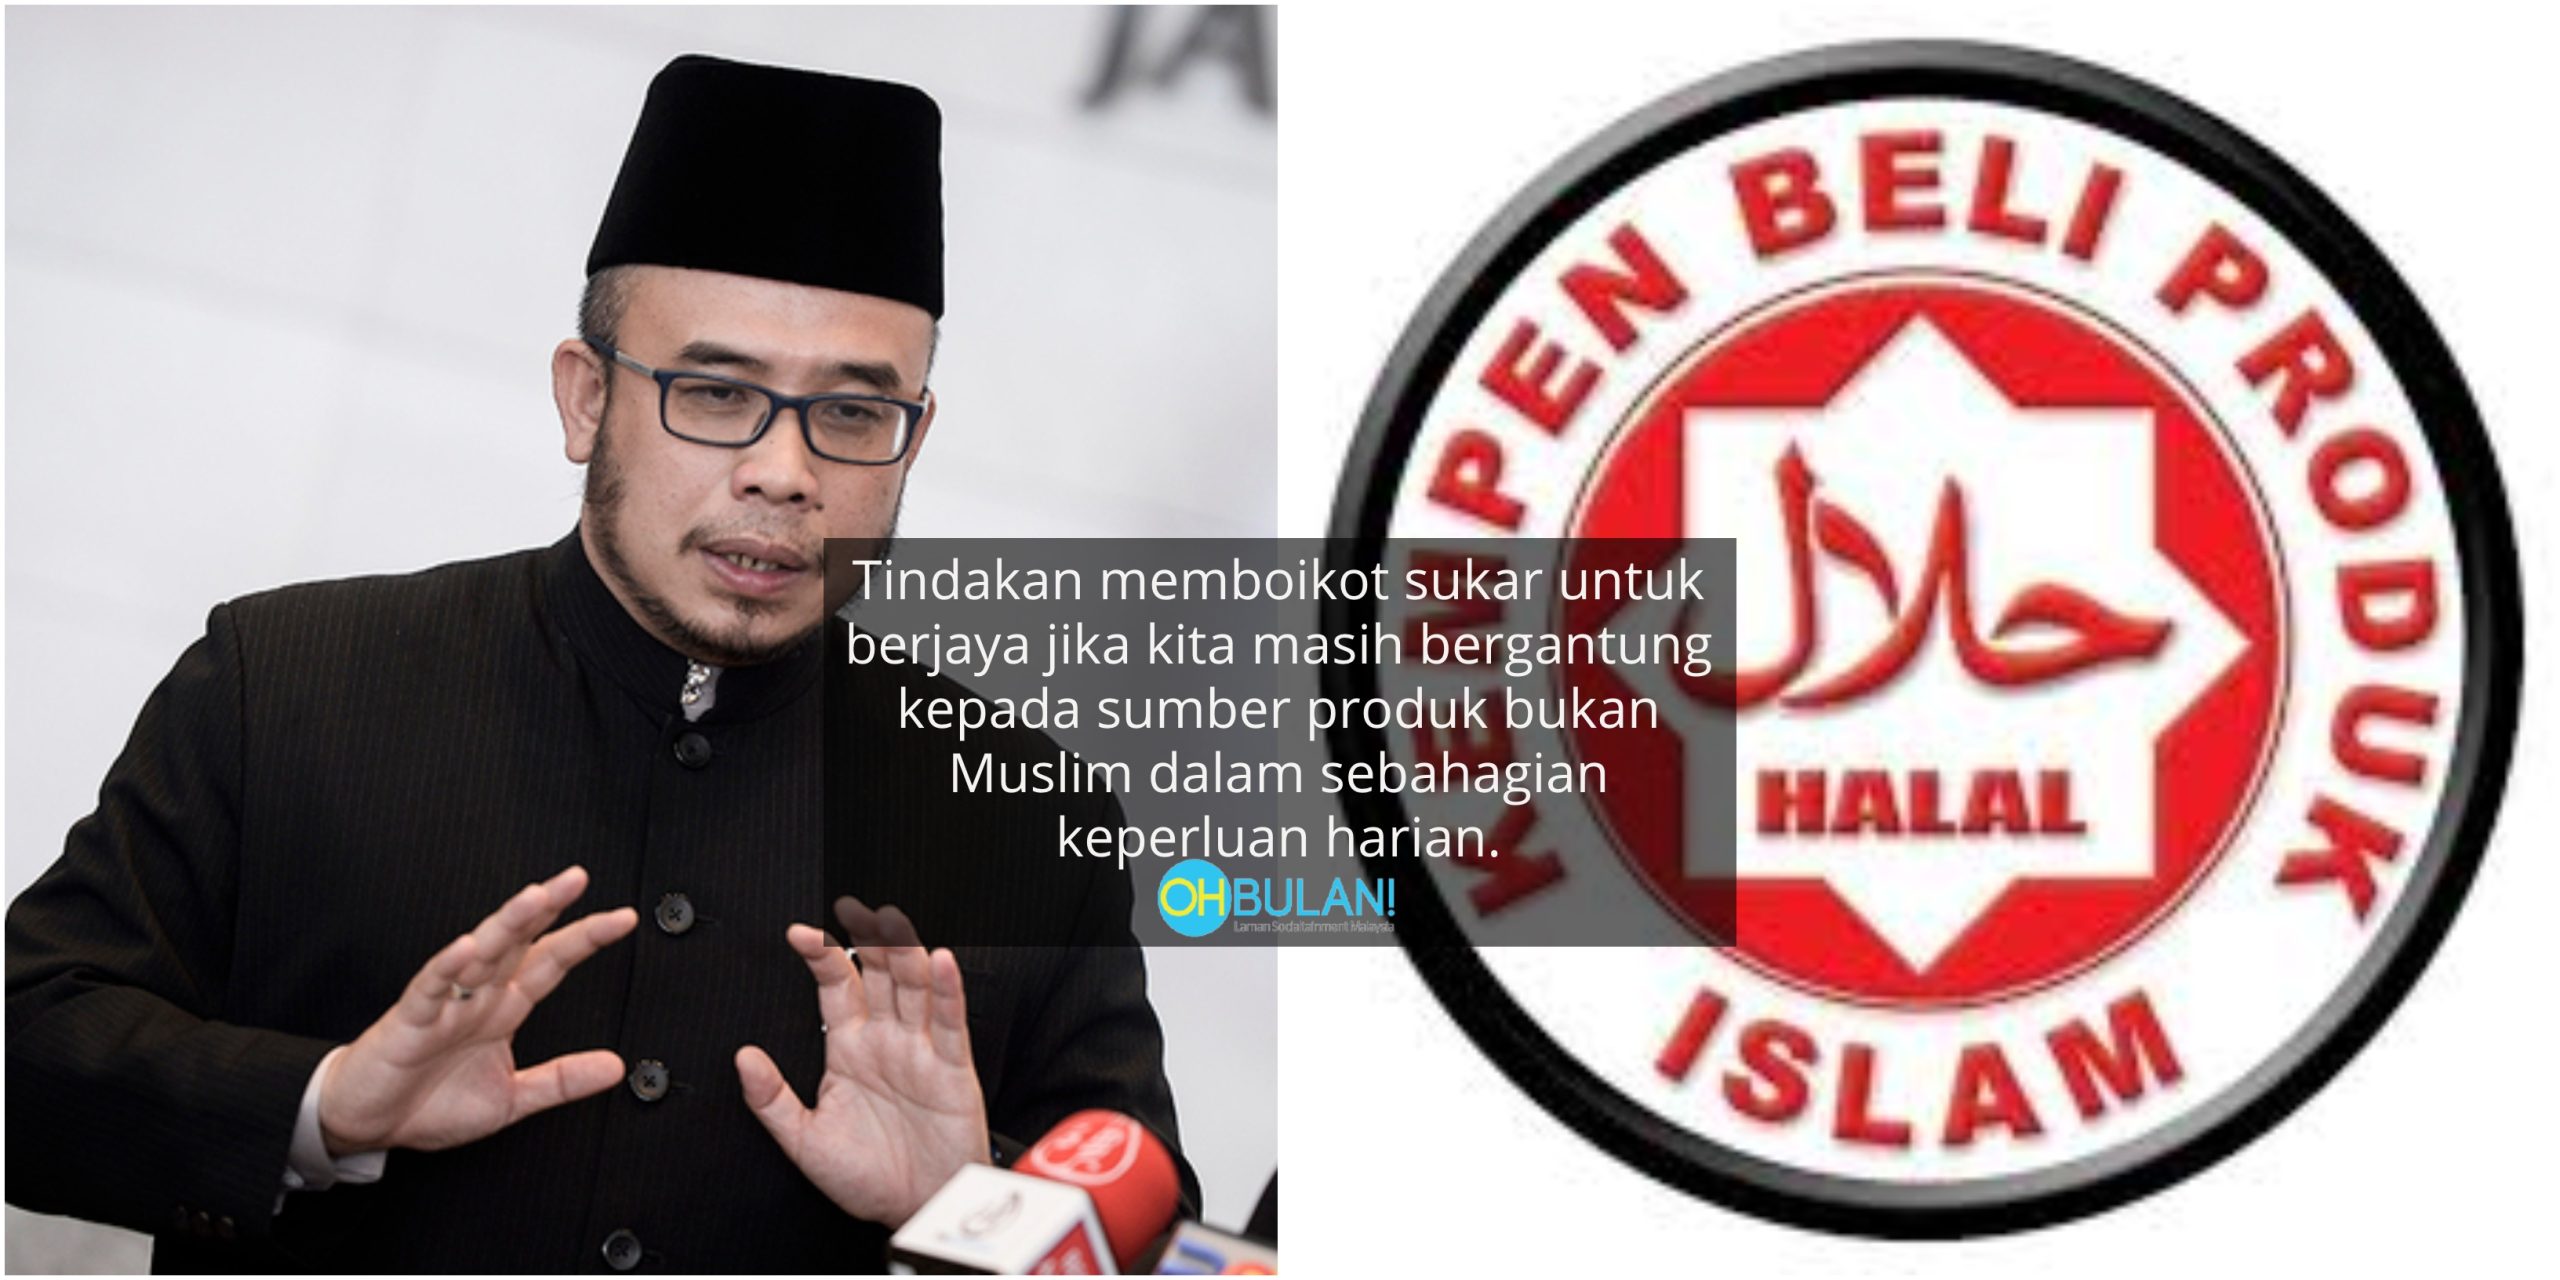 ‘Memboikot Barangan Non-Muslim Bukan Satu Seruan Yang Bijak’ – Mufti Perlis